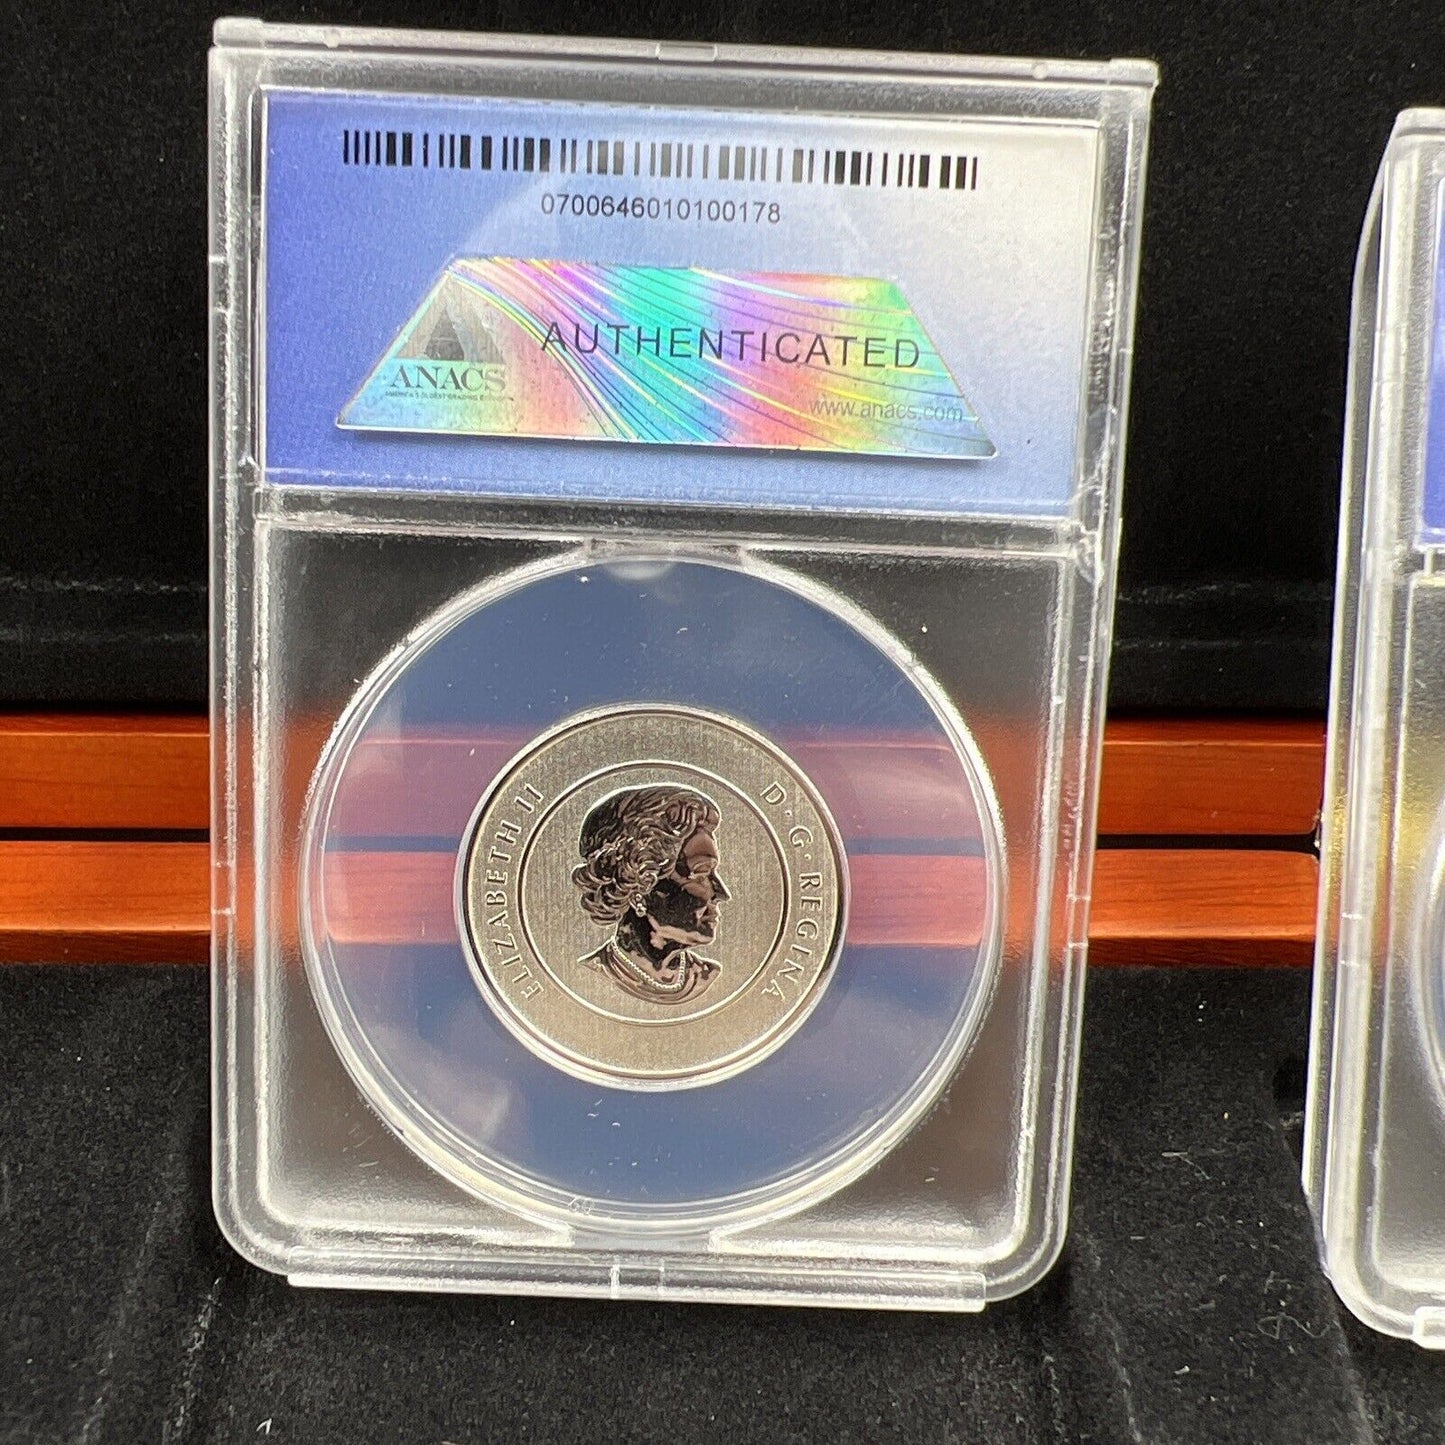 3 Coin Set 2011 2012 $20 Canada Silver Canoe Polar Bear & Last Penny MS70 ANACS